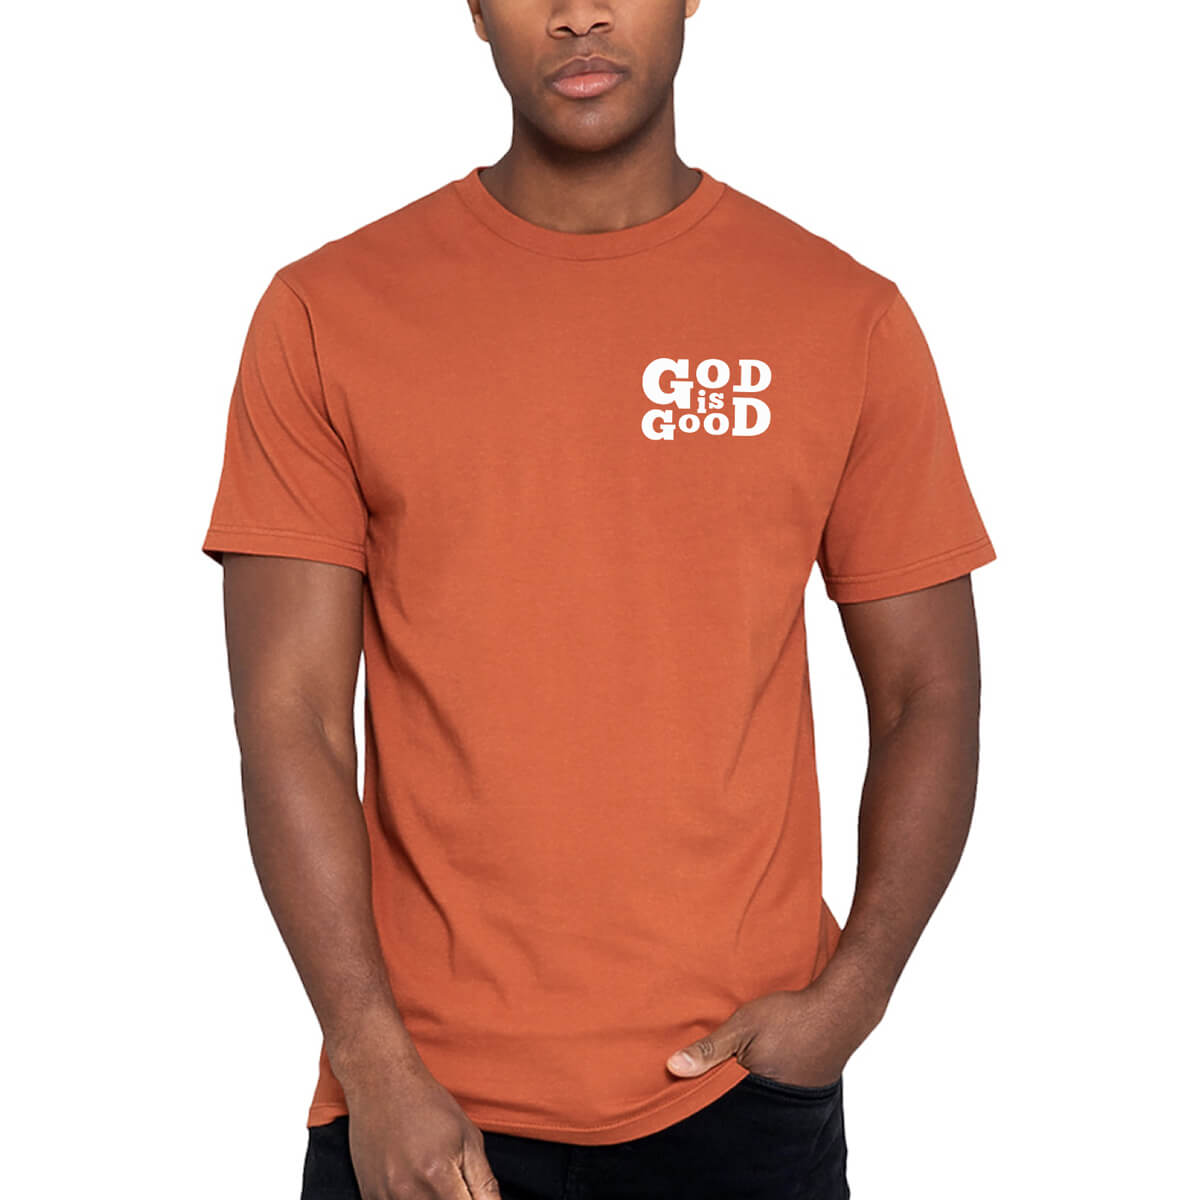 God Is Good Pocket Print Men's T-Shirt